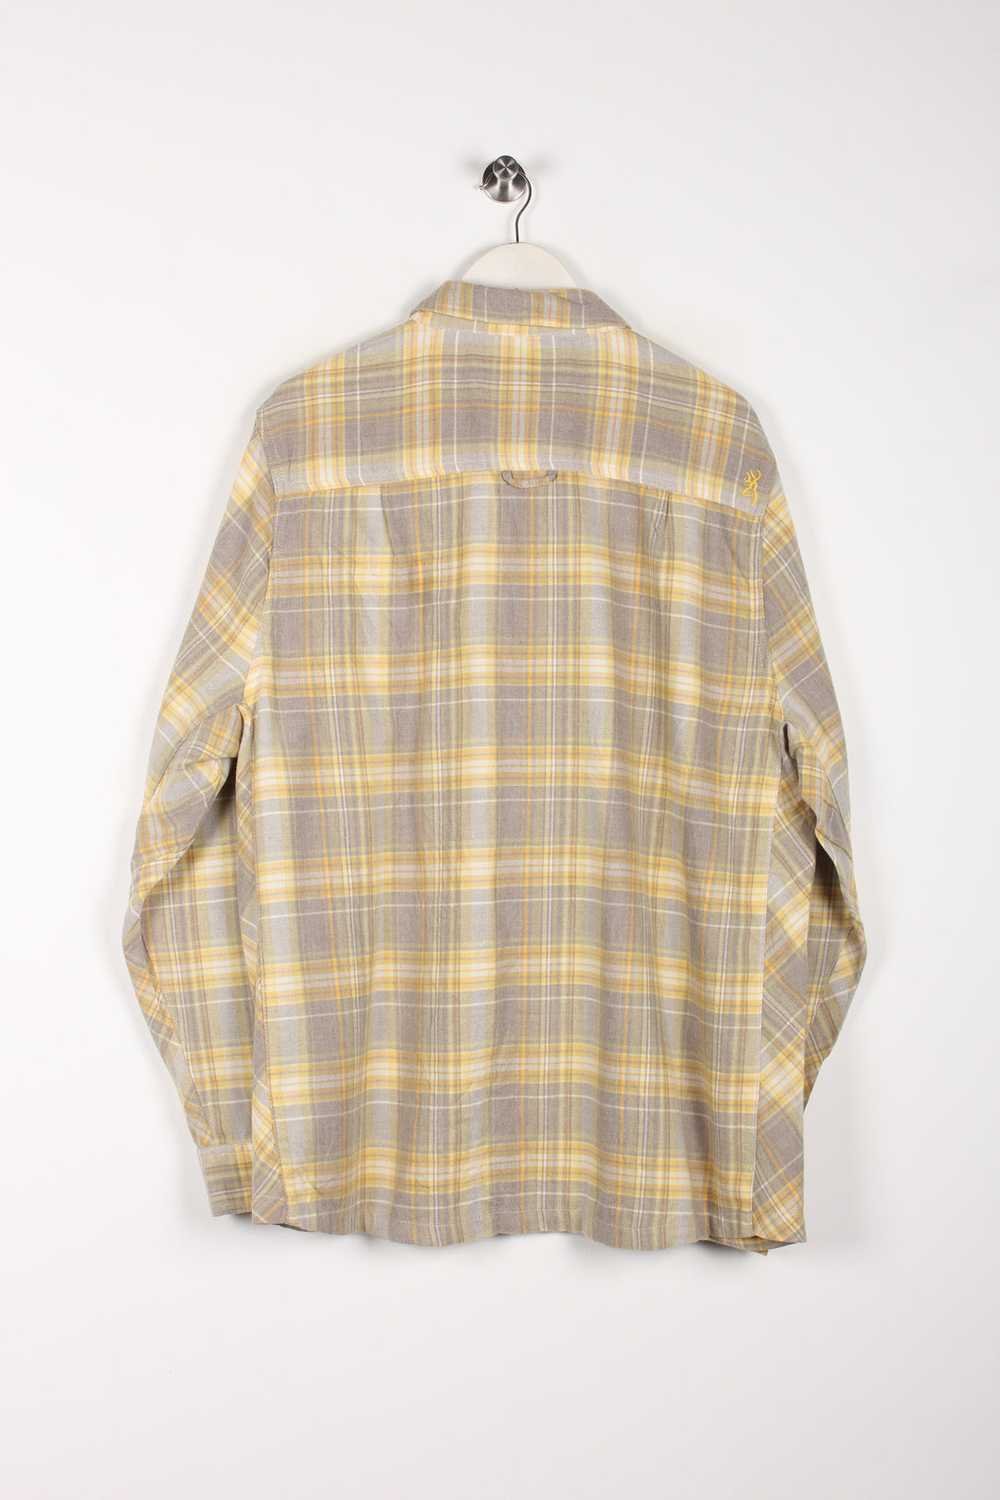 Vintage Plaid Flannel Shirt XL - image 3